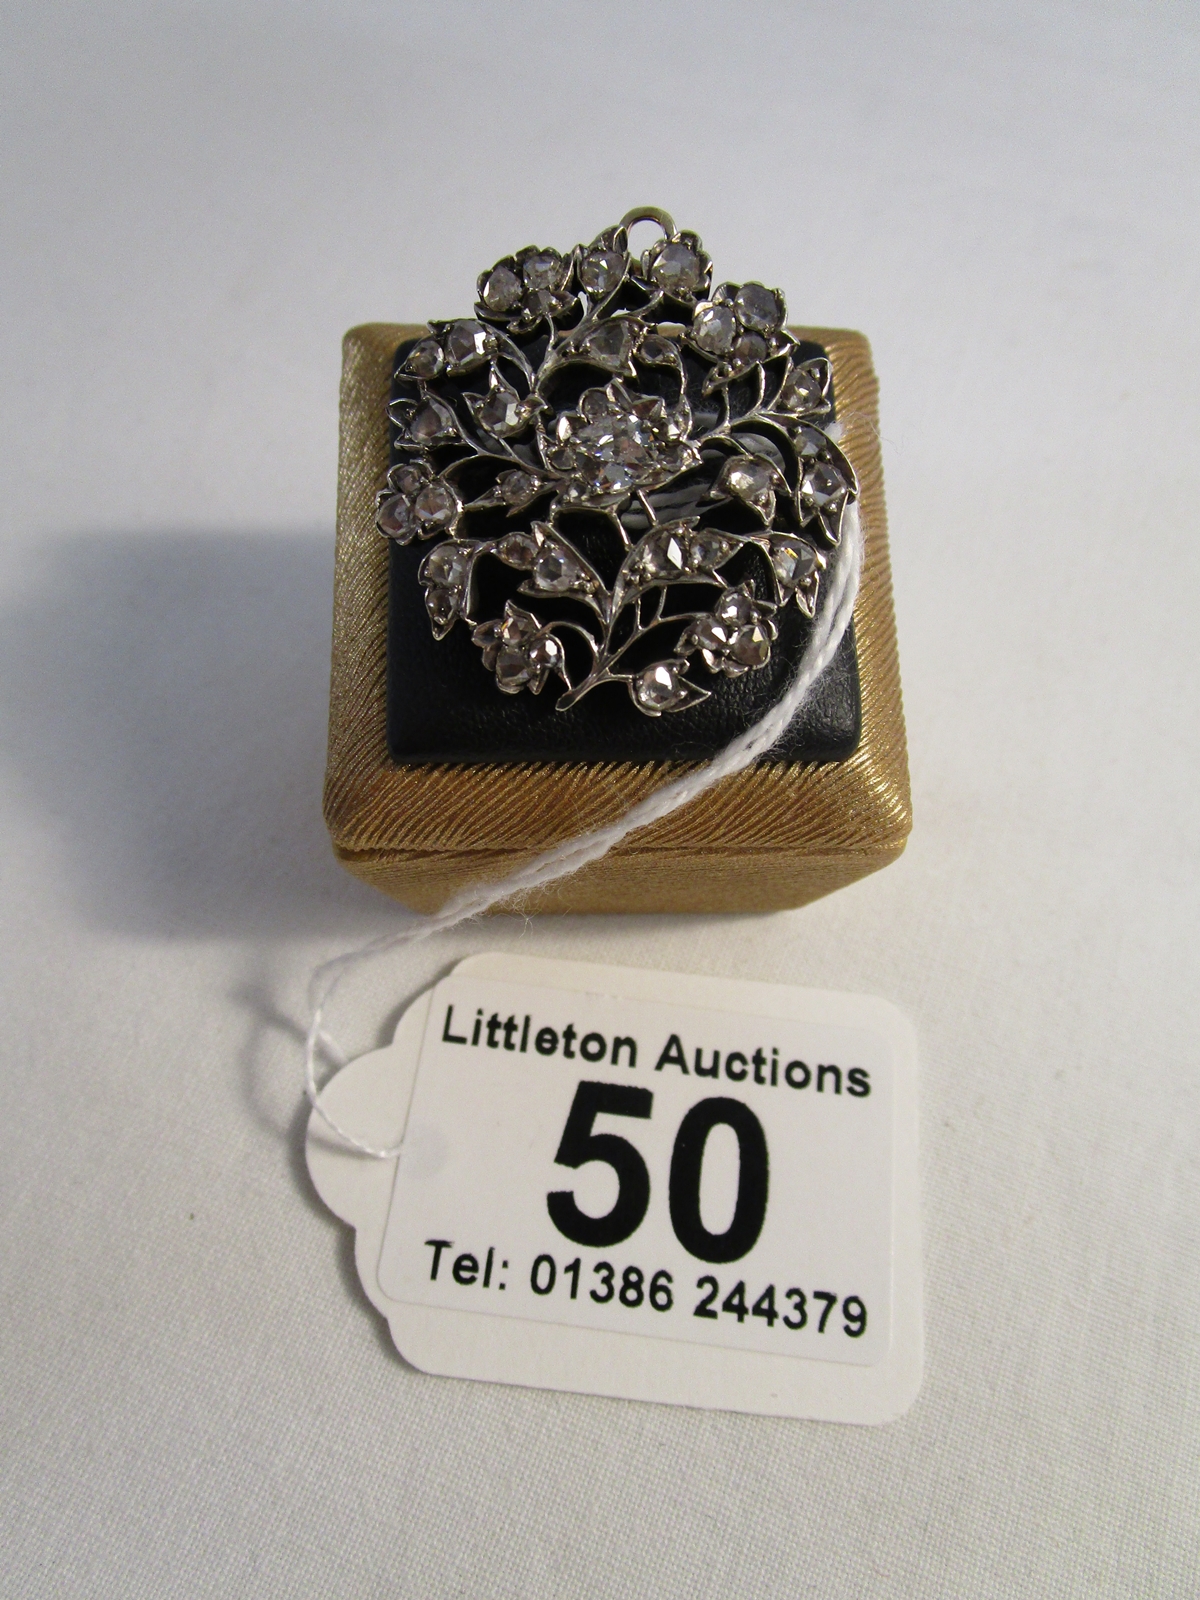 Fine early 19C rose cut diamond brooch pendant